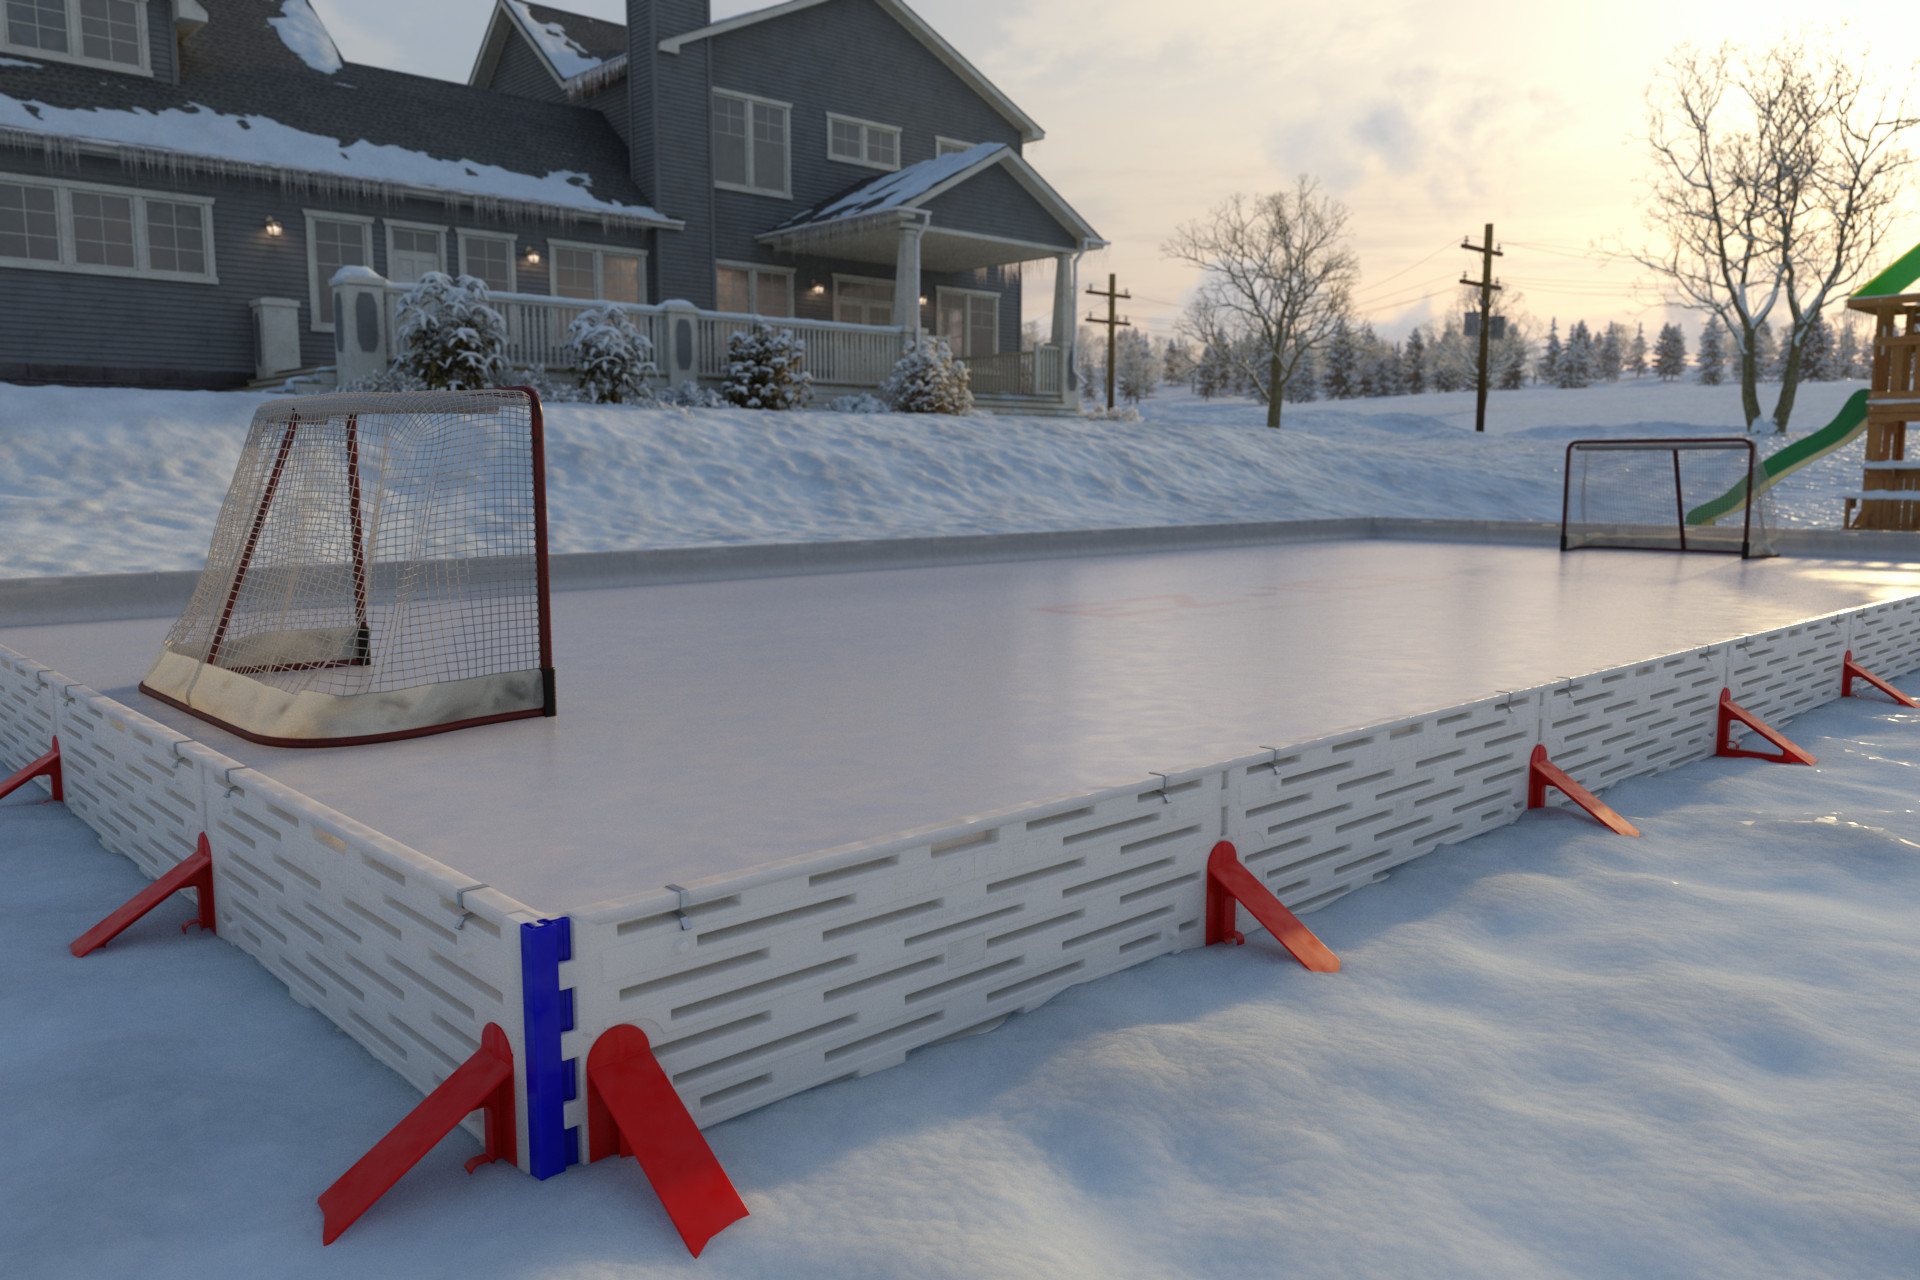 35 Insanely Chic Ice Rinks Backyard - Ice Rinks BackyarD Best Of BackyarD Ice Hockey Rinks Best Home Ice Skating Rink Of Ice Rinks BackyarD